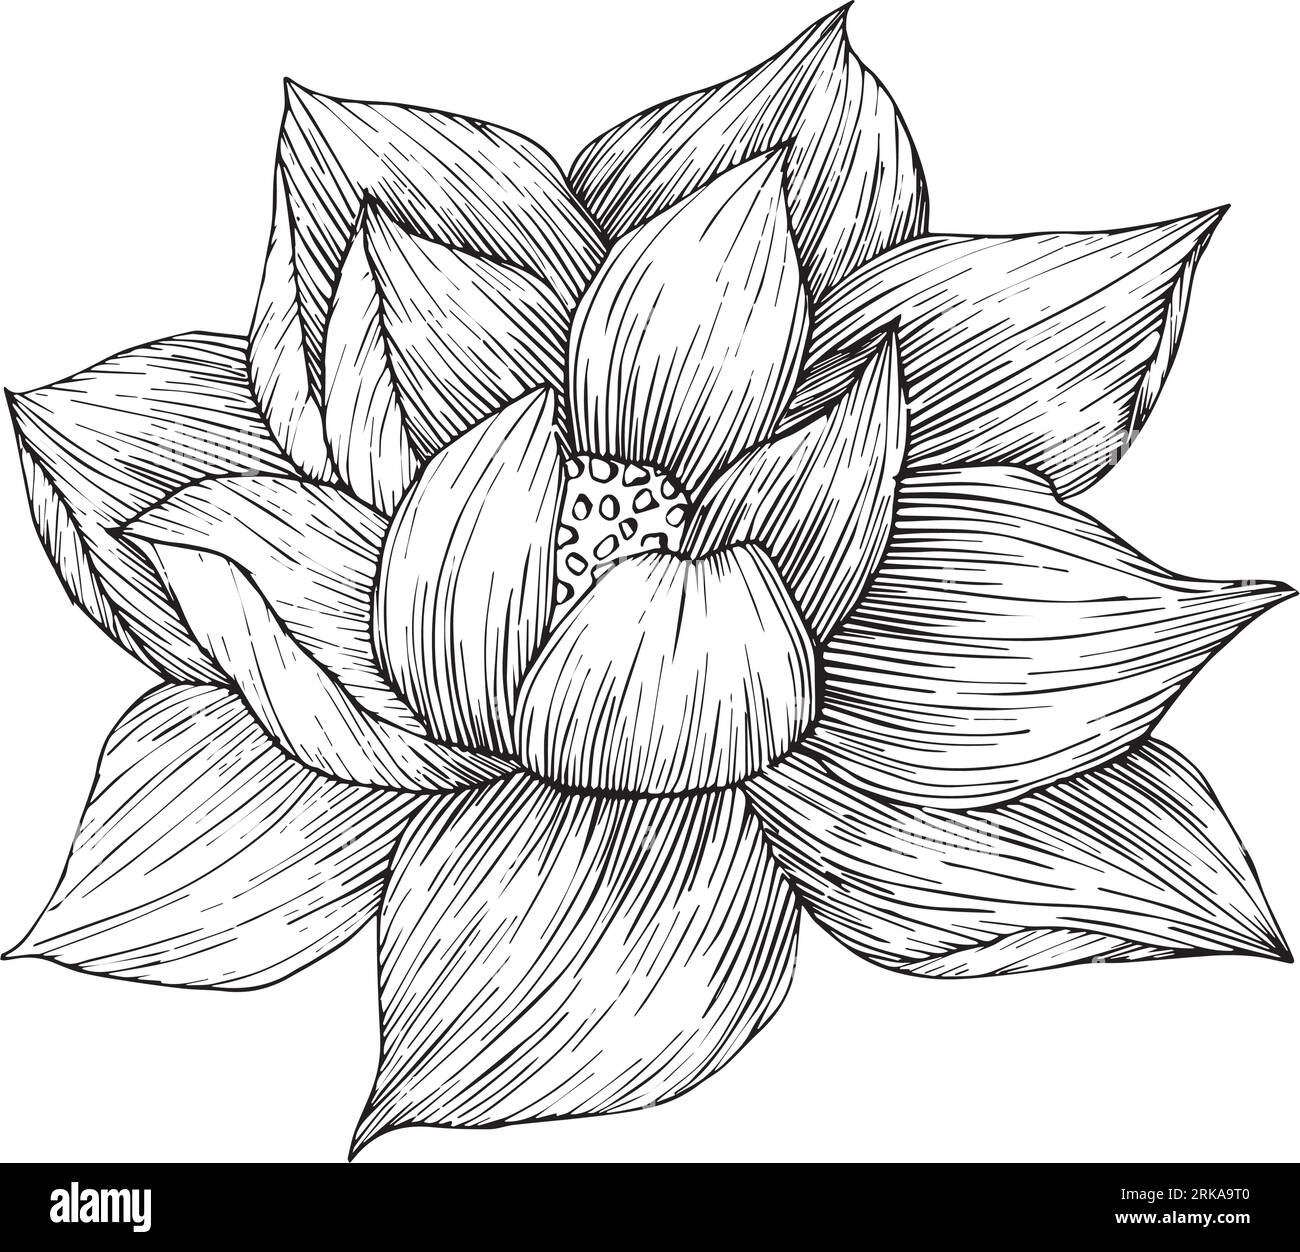 How To Draw A Lotus Flower | Easy Draw For Kids-saigonsouth.com.vn